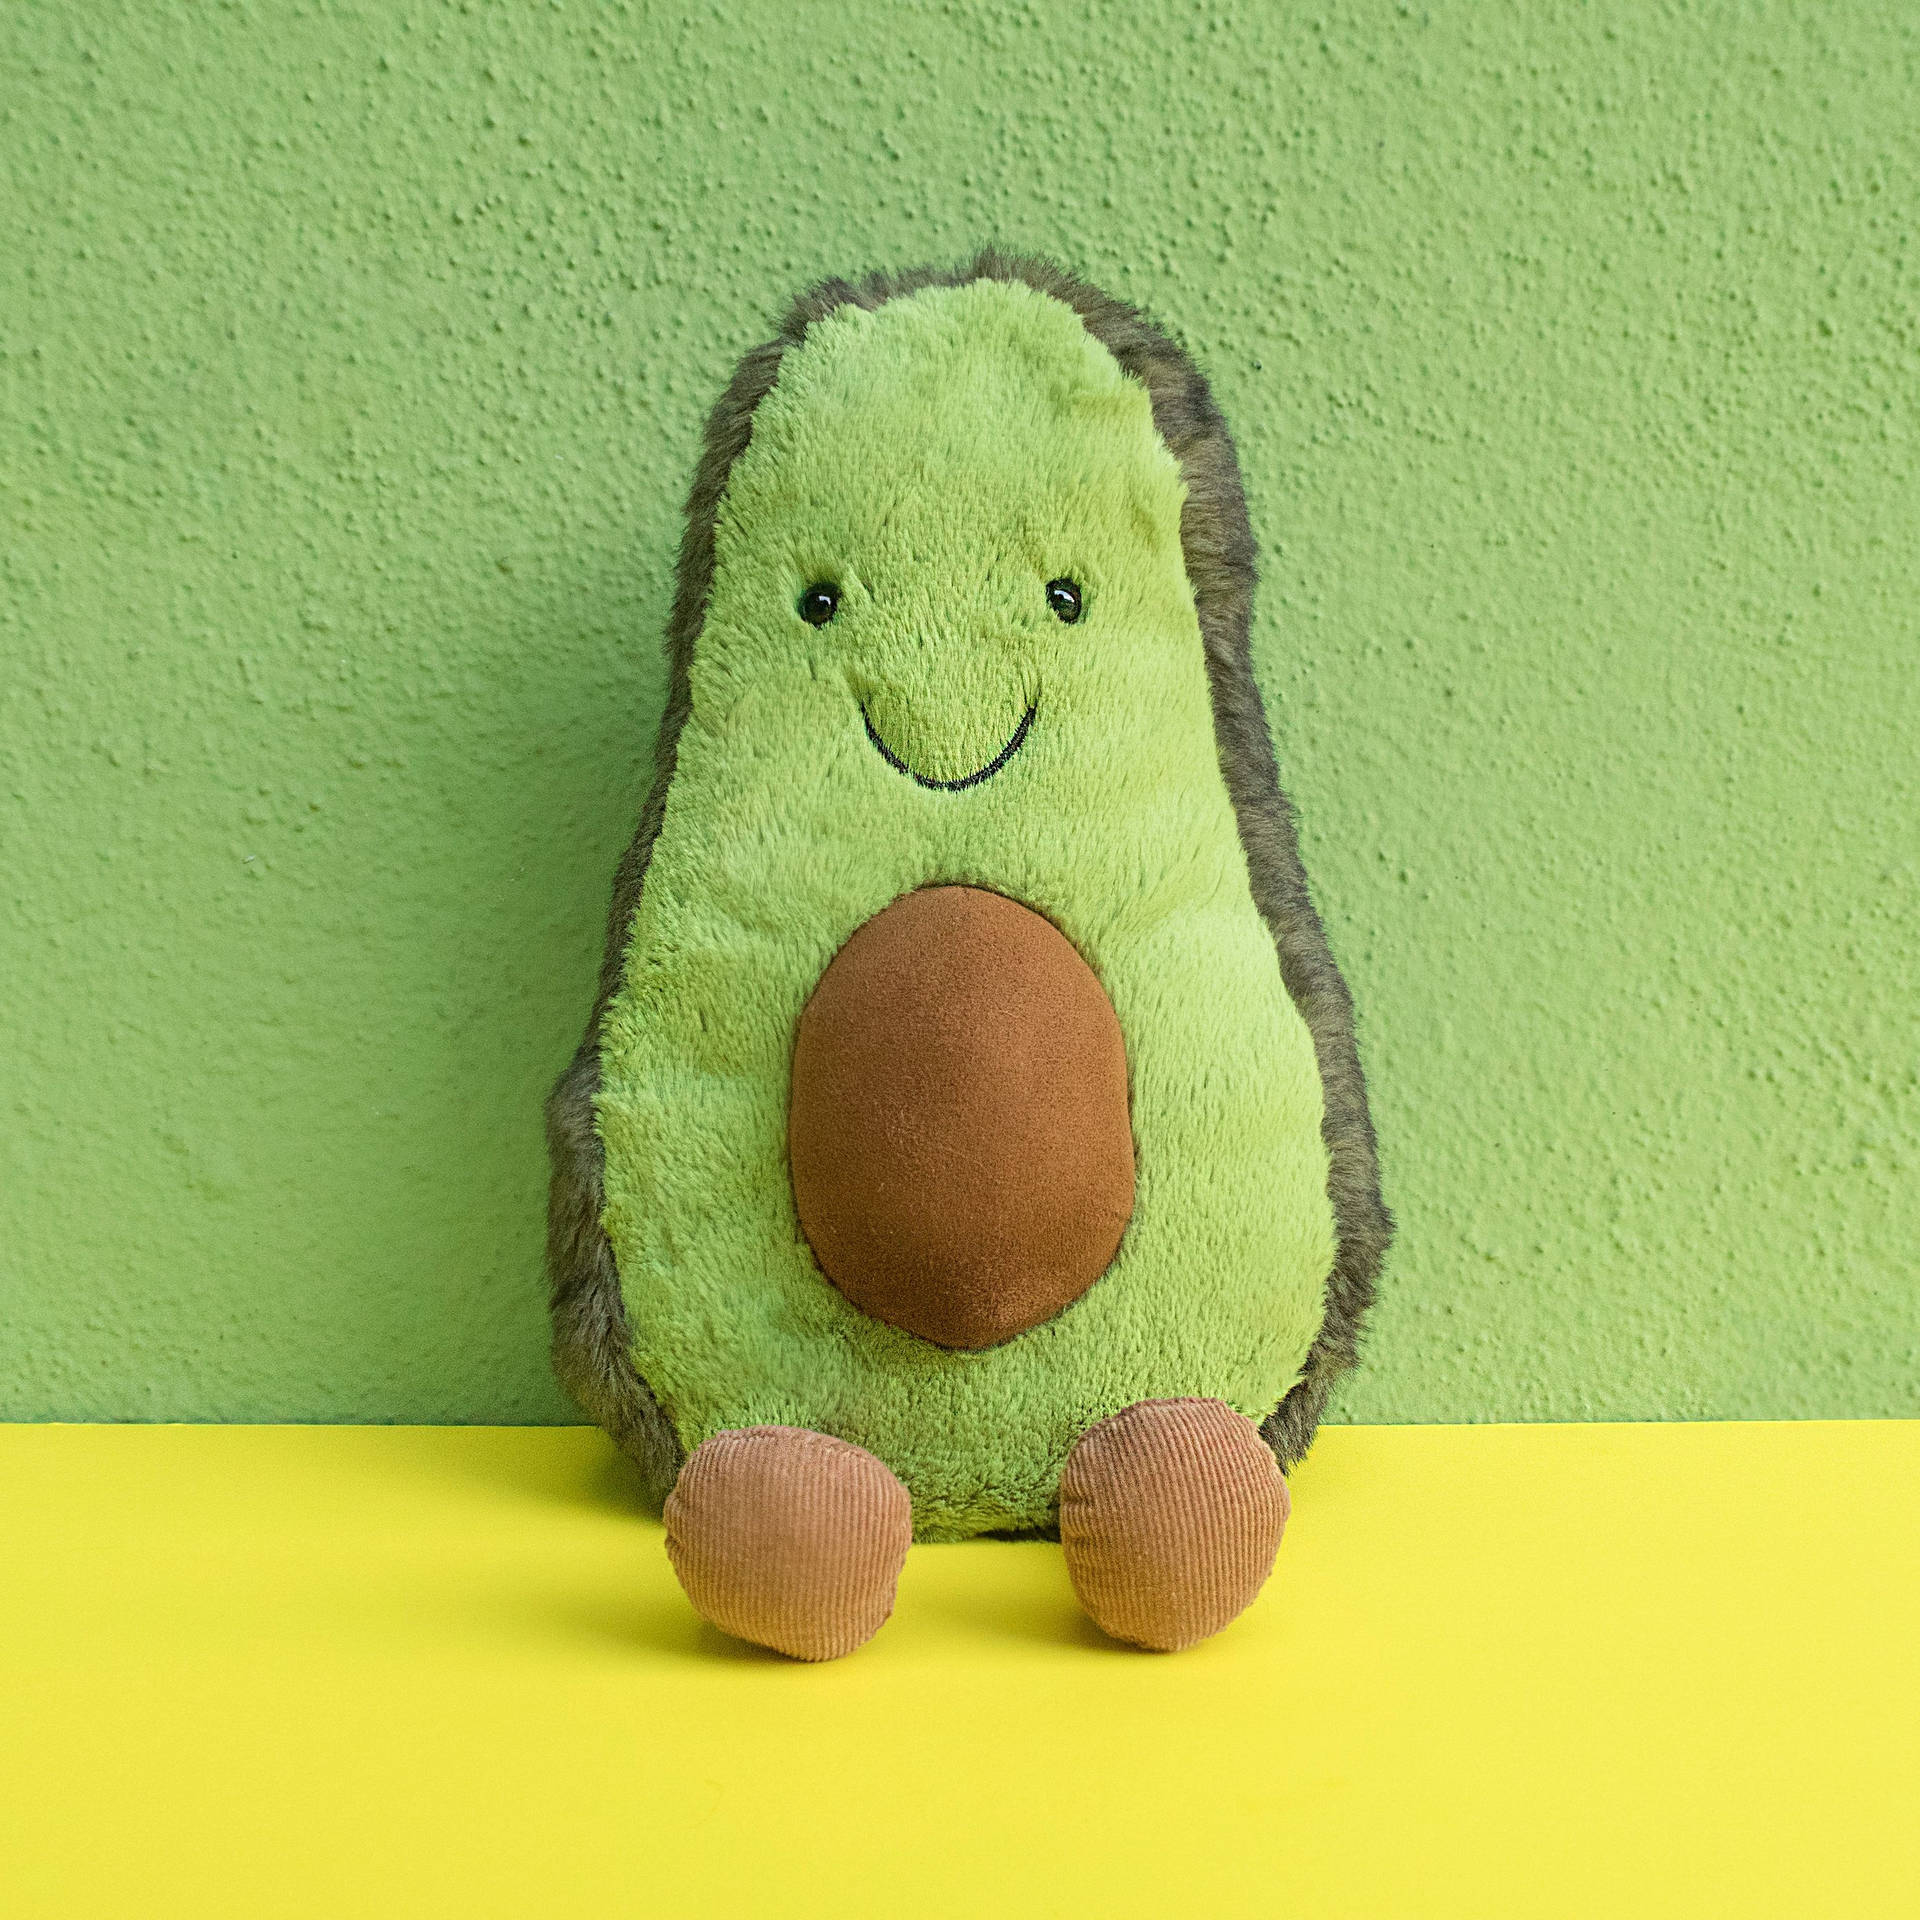 Ipad Pro Cute Avocado Toy Wallpaper